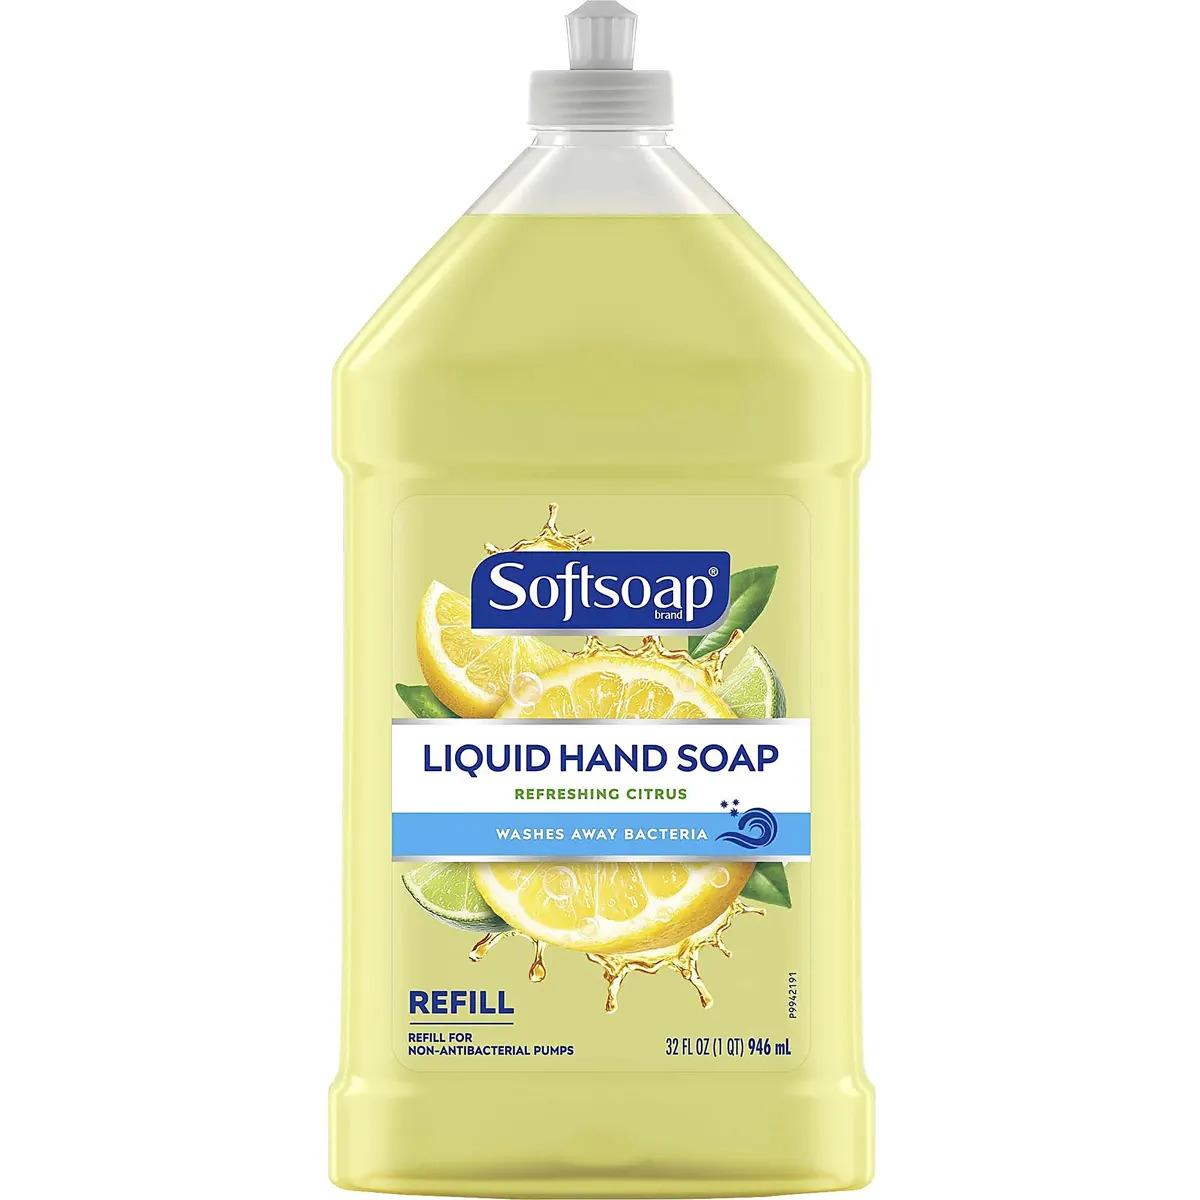 Softsoap Citrus Scent Liquid Hand Soap Refill for $2.49